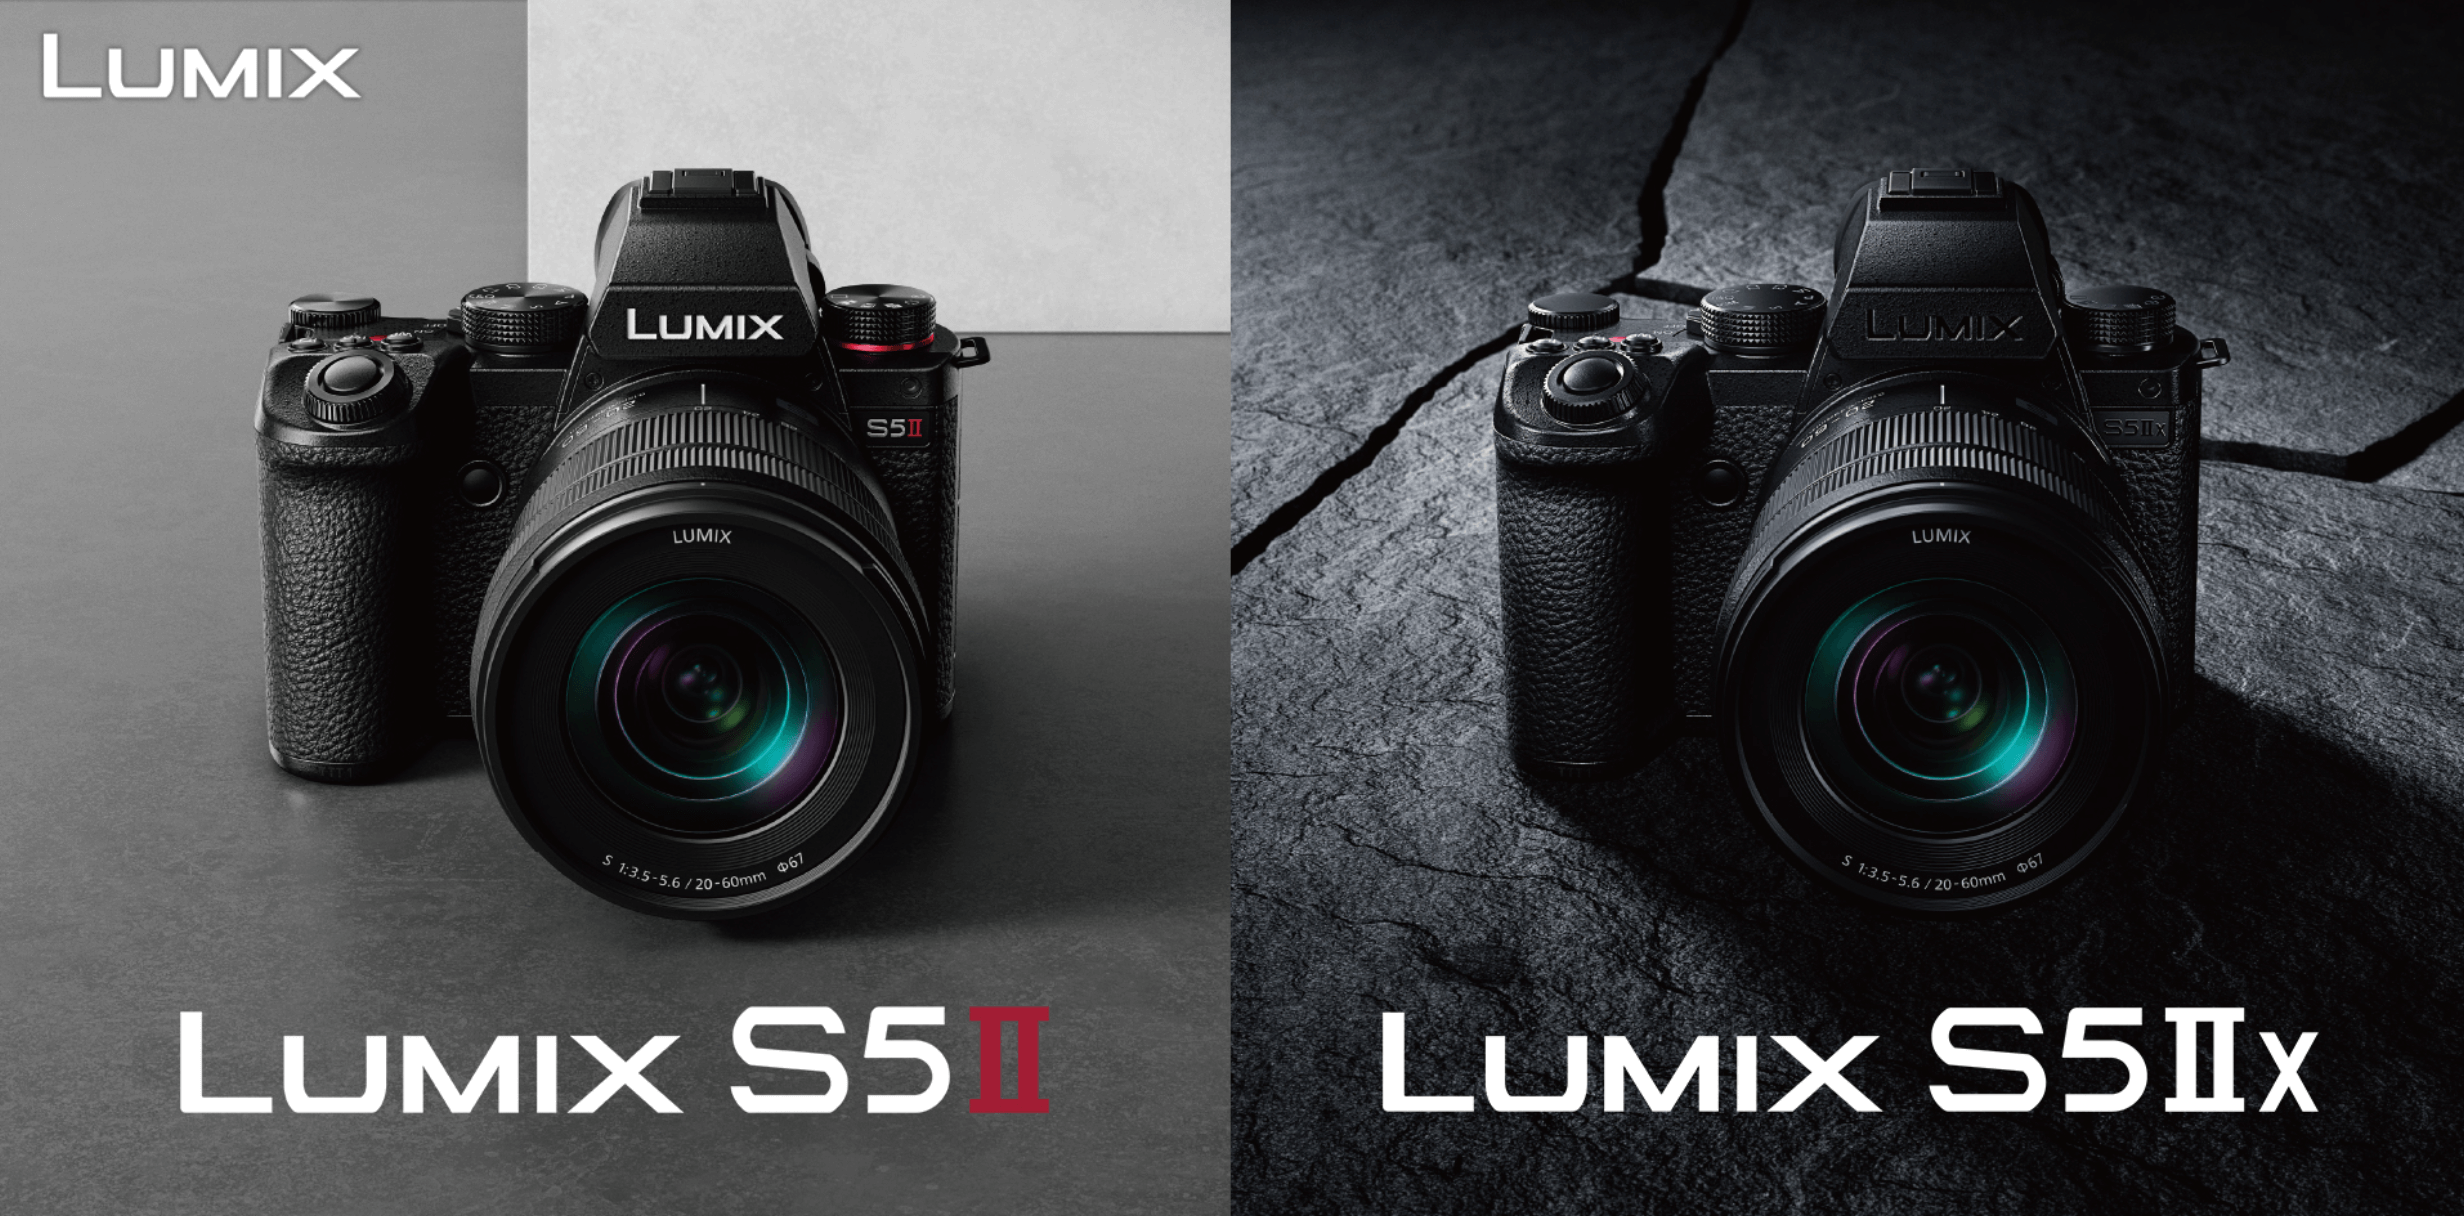 LUMIX S 24mm F1.8 S-S24 [ライカL  単焦点レンズ